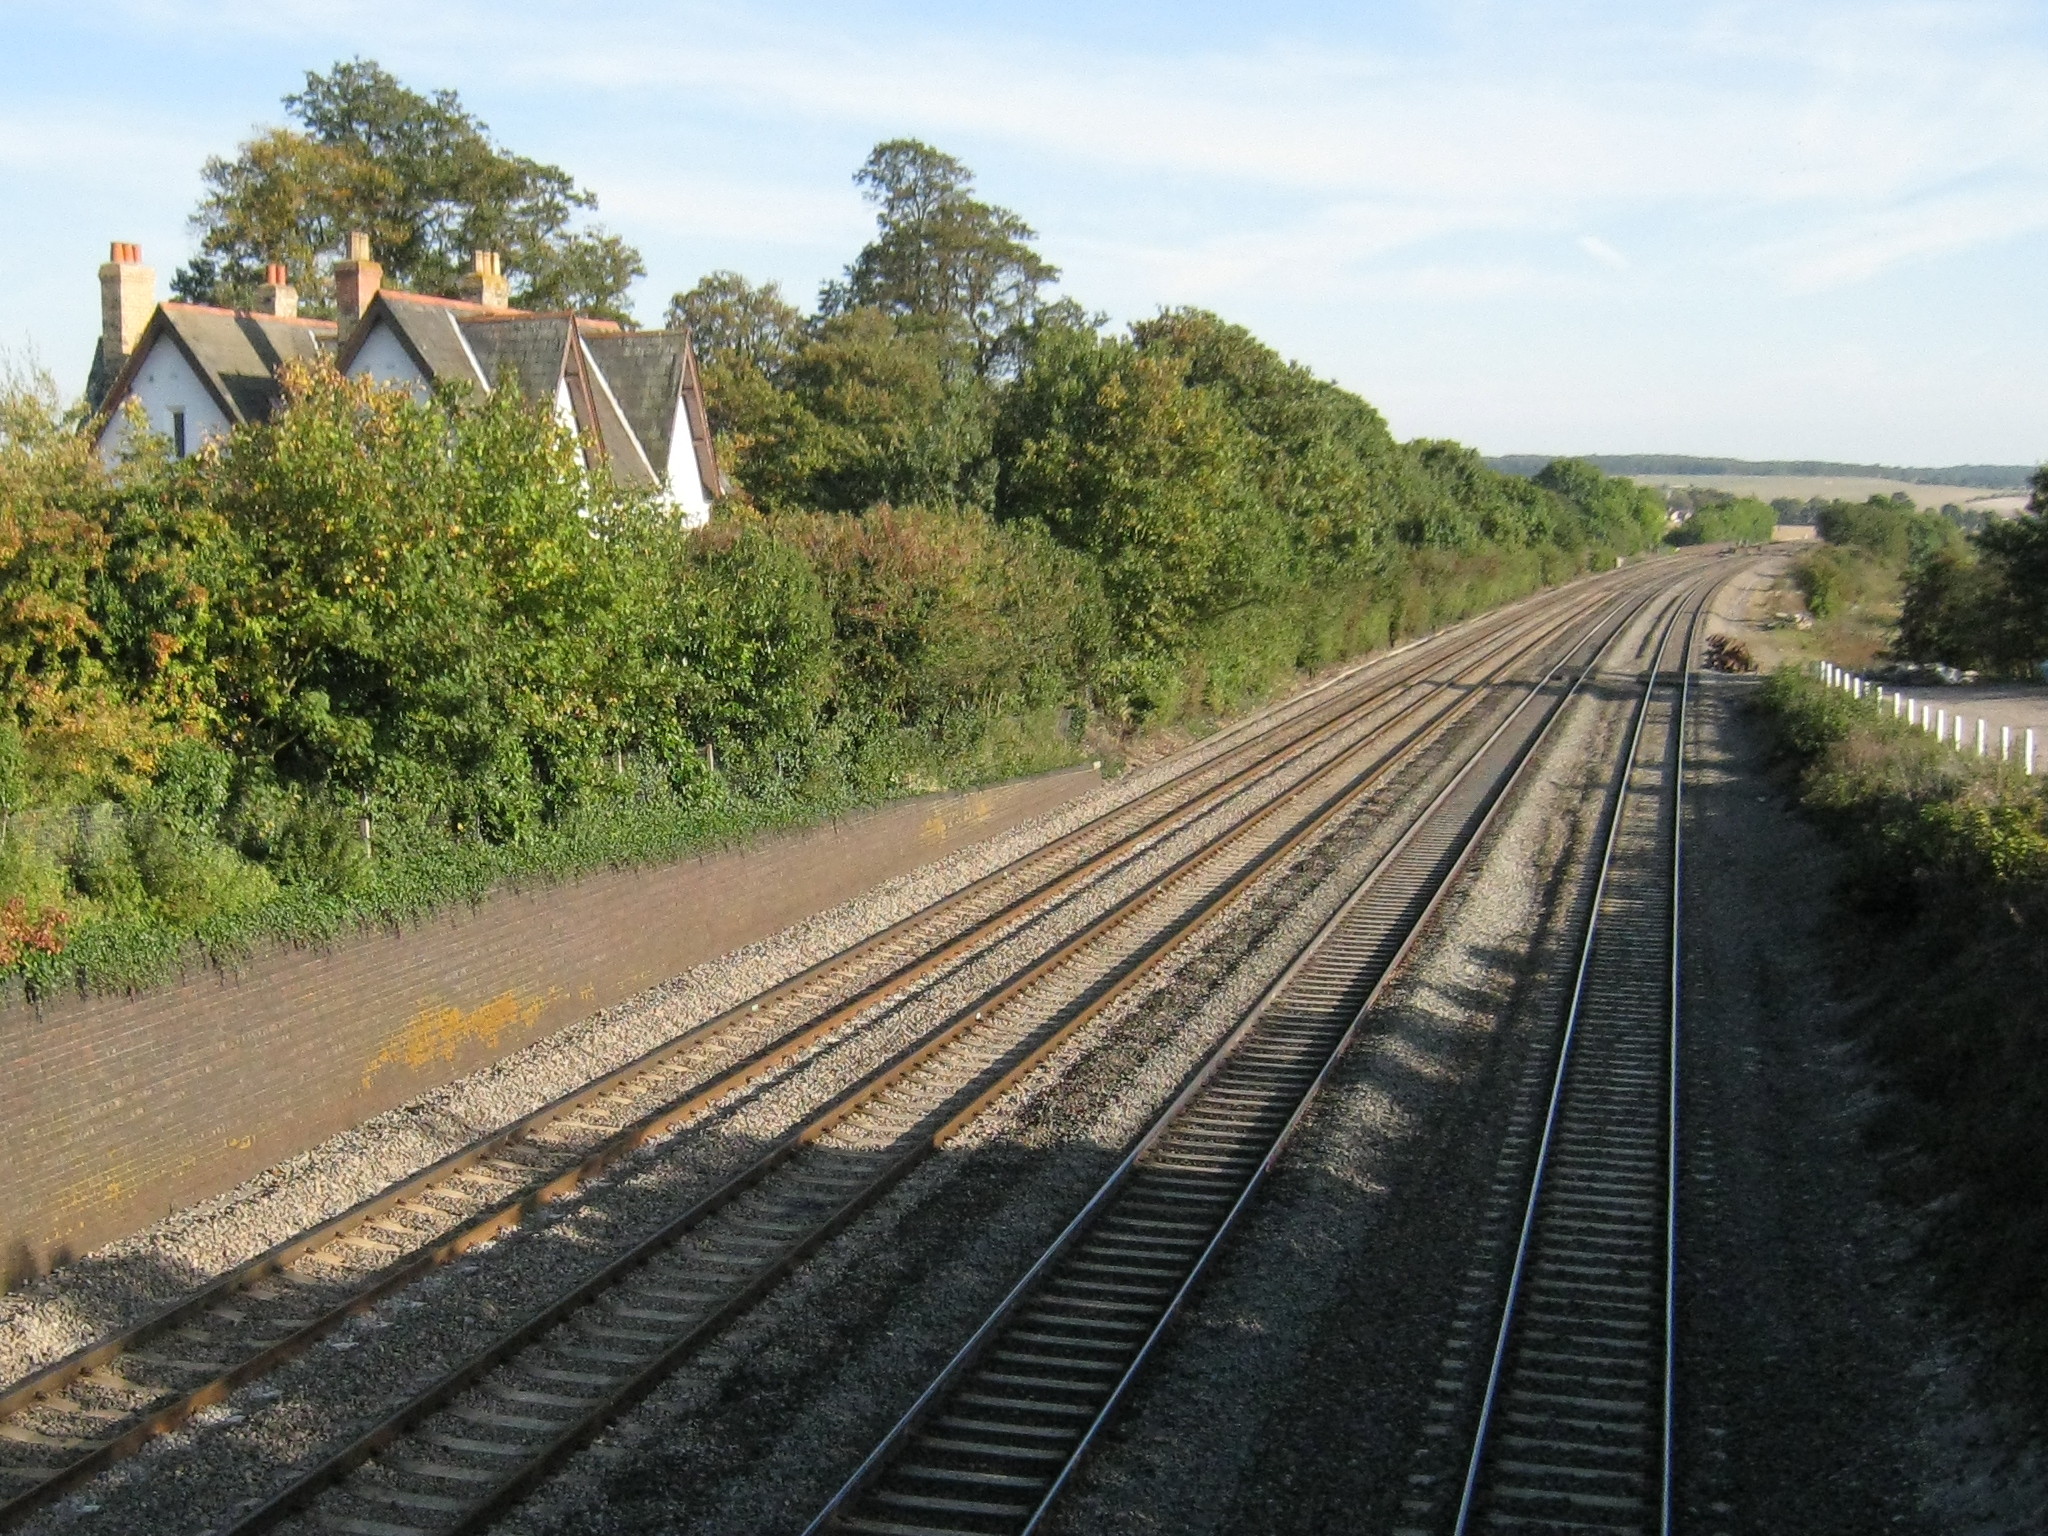 Moulsford railway station